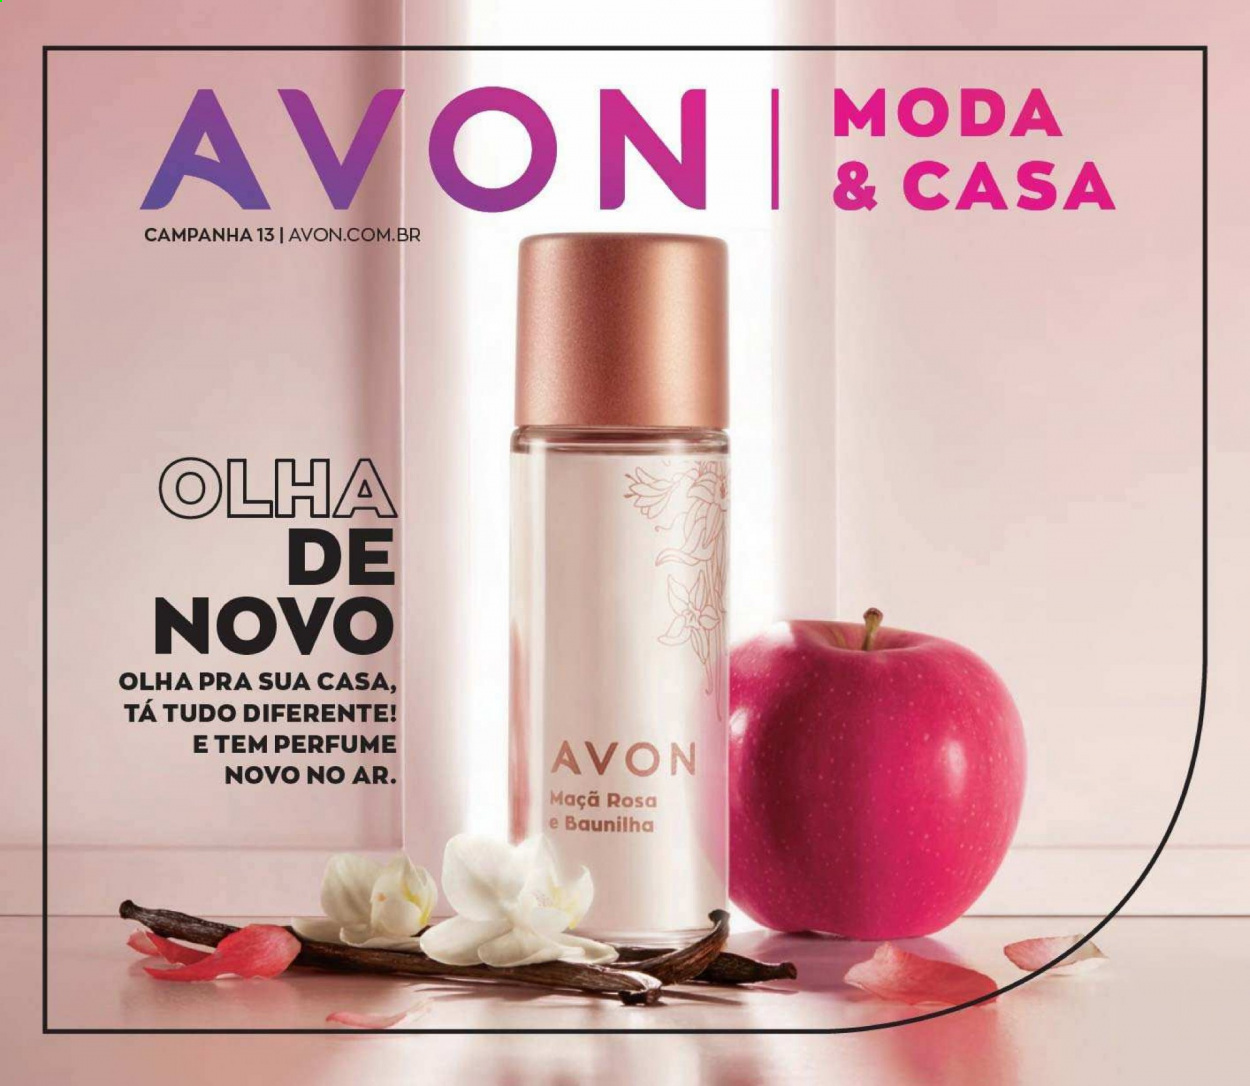 thumbnail - Folheto Avon - Produtos em promoção - Avon, perfume. Página 1.